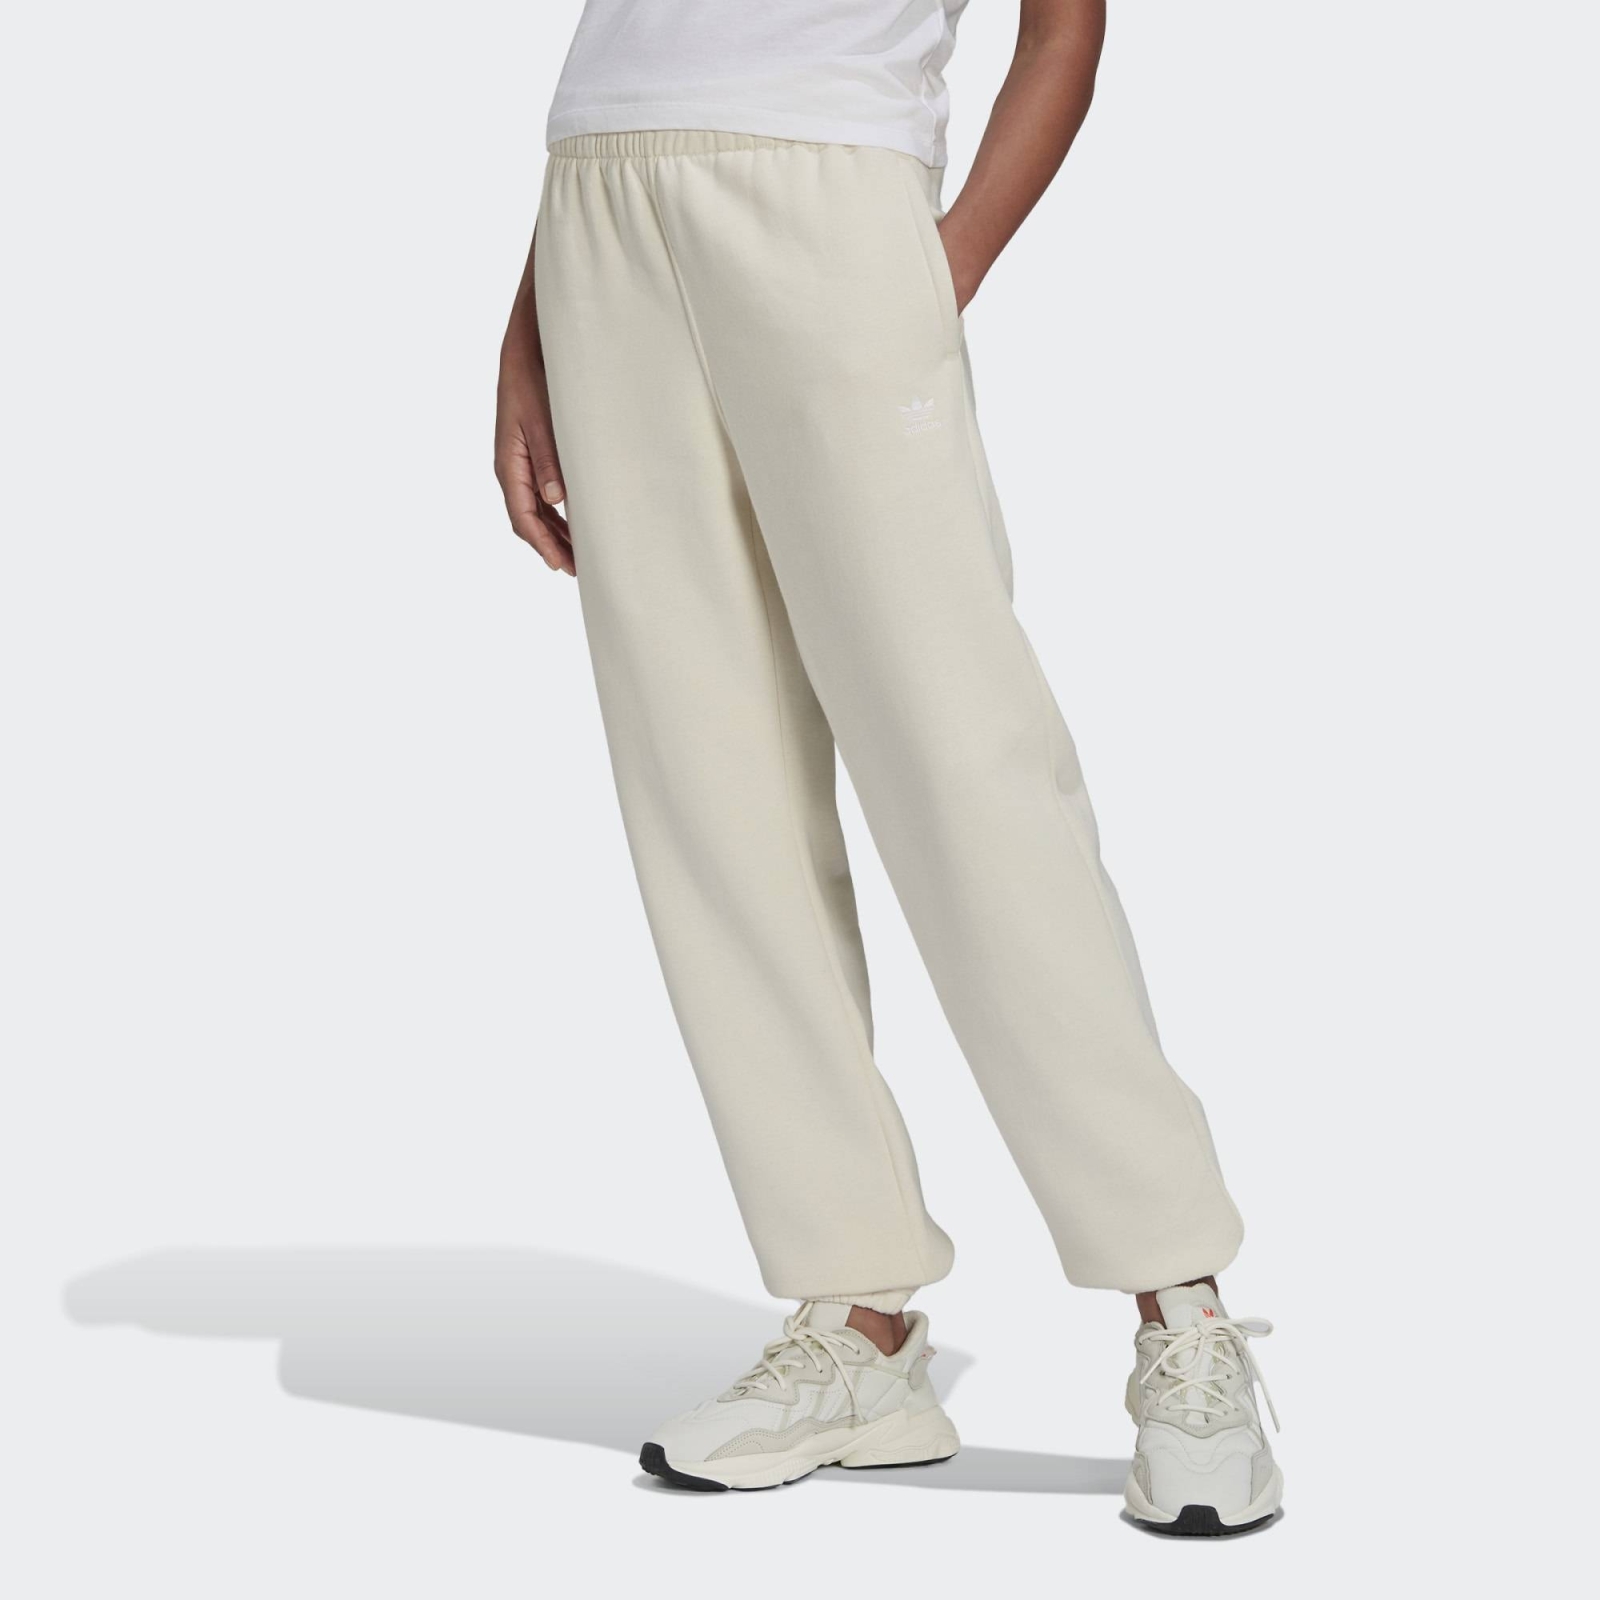 Buy adidas Originals Pants, Clothing Online